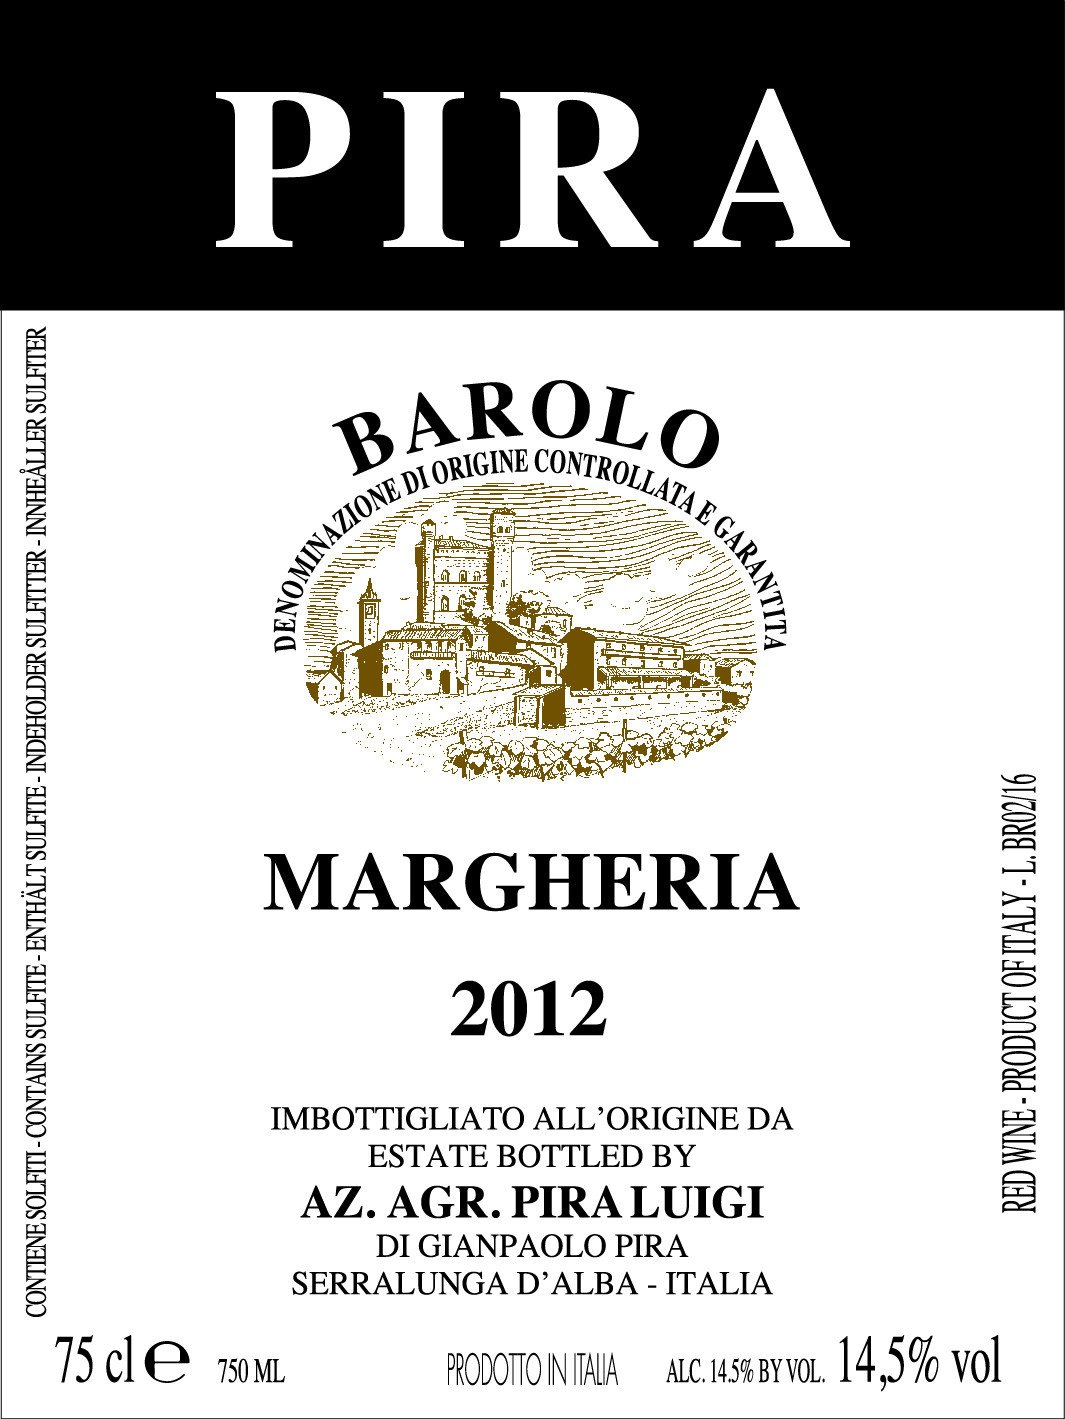 Pira Barolo Margheria 2012